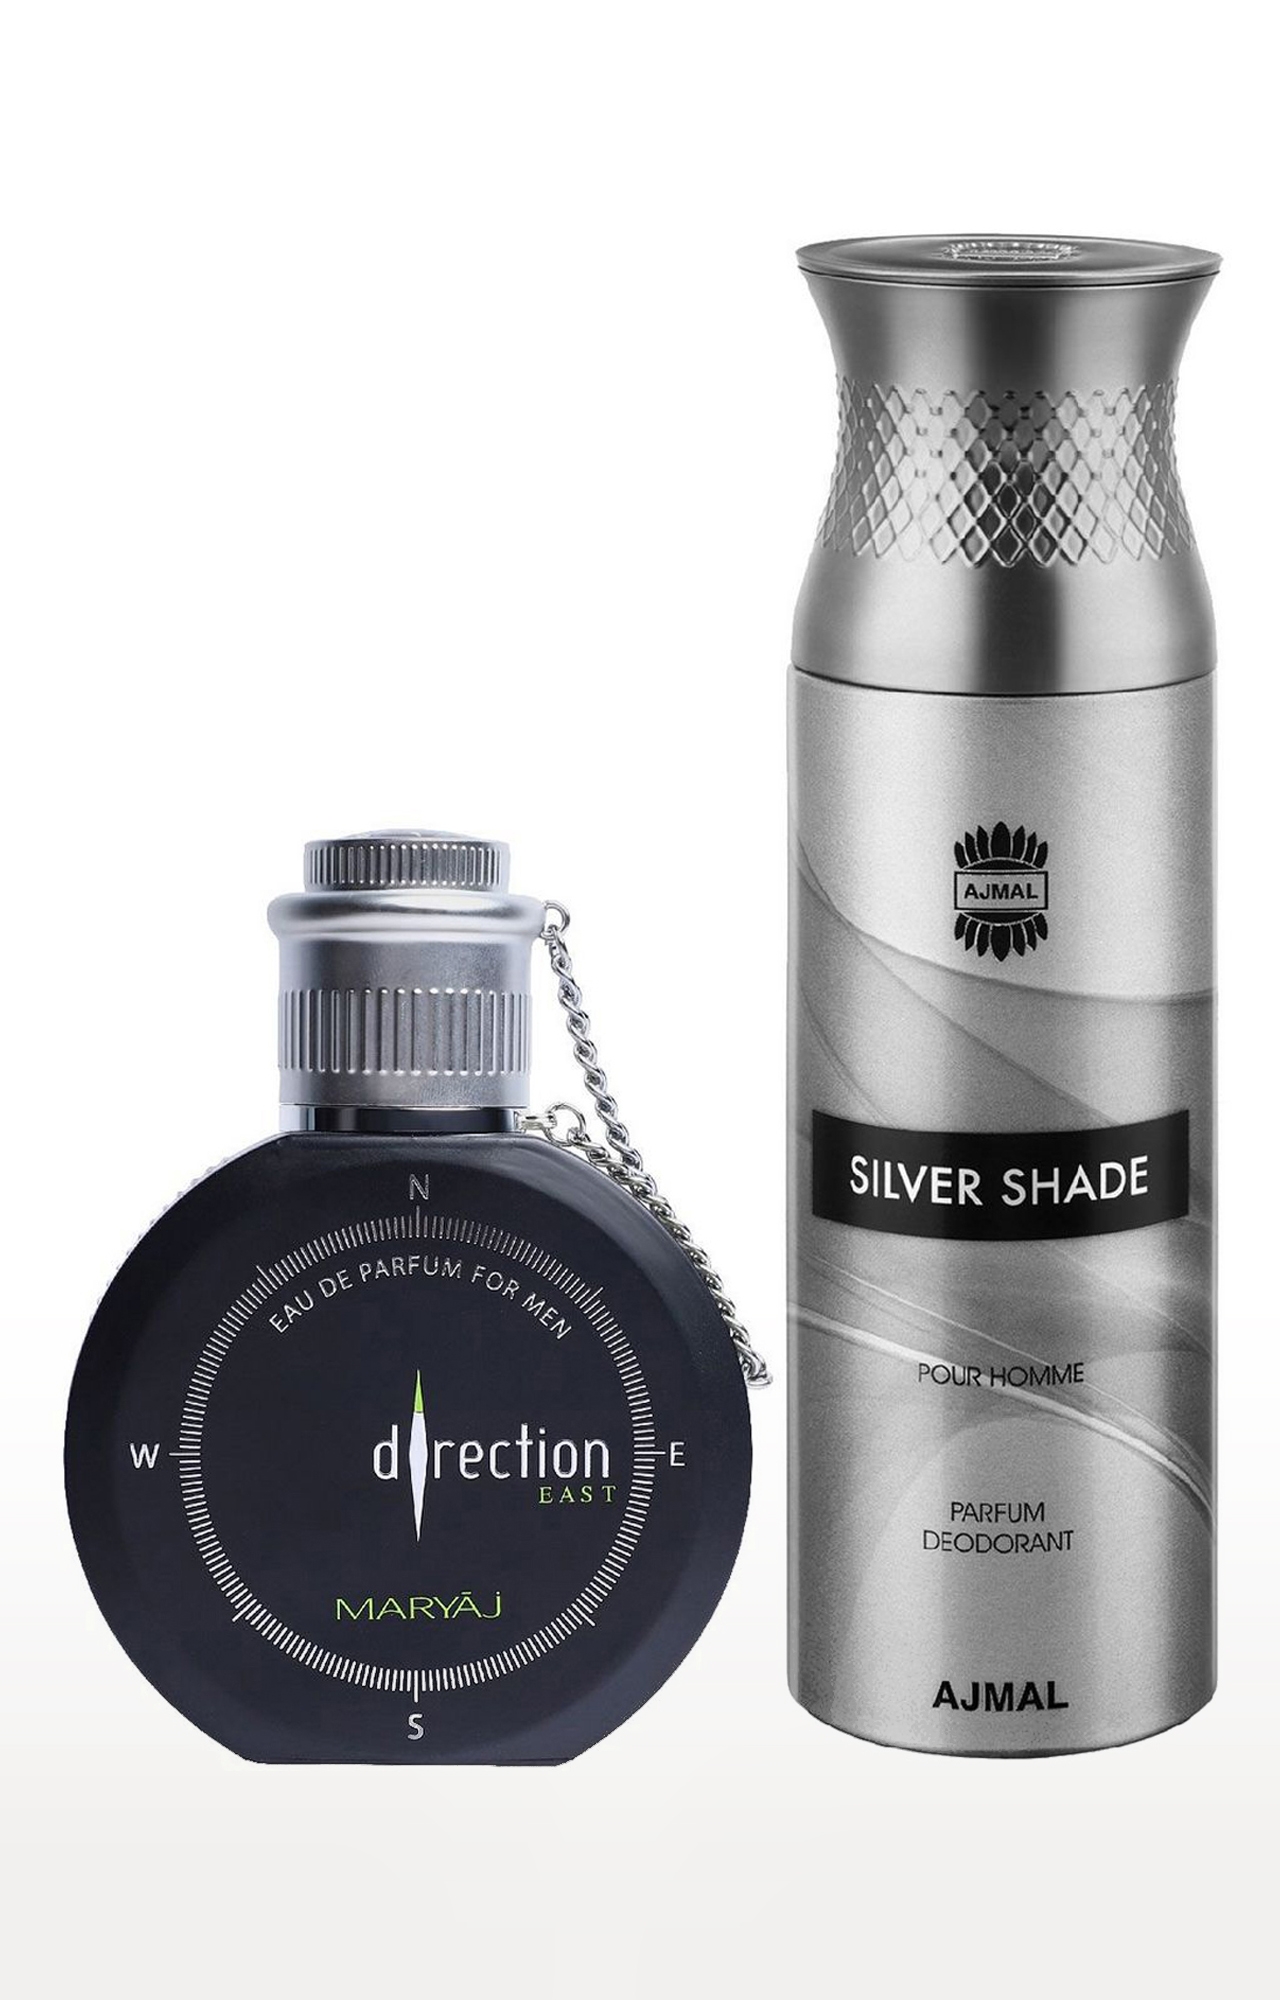 Ajmal | Maryaj Direction East Eau De Parfum Perfume 100ml for Men and Ajmal Silver Shade Homme Deodorant Fragrance 200ml for Men 0